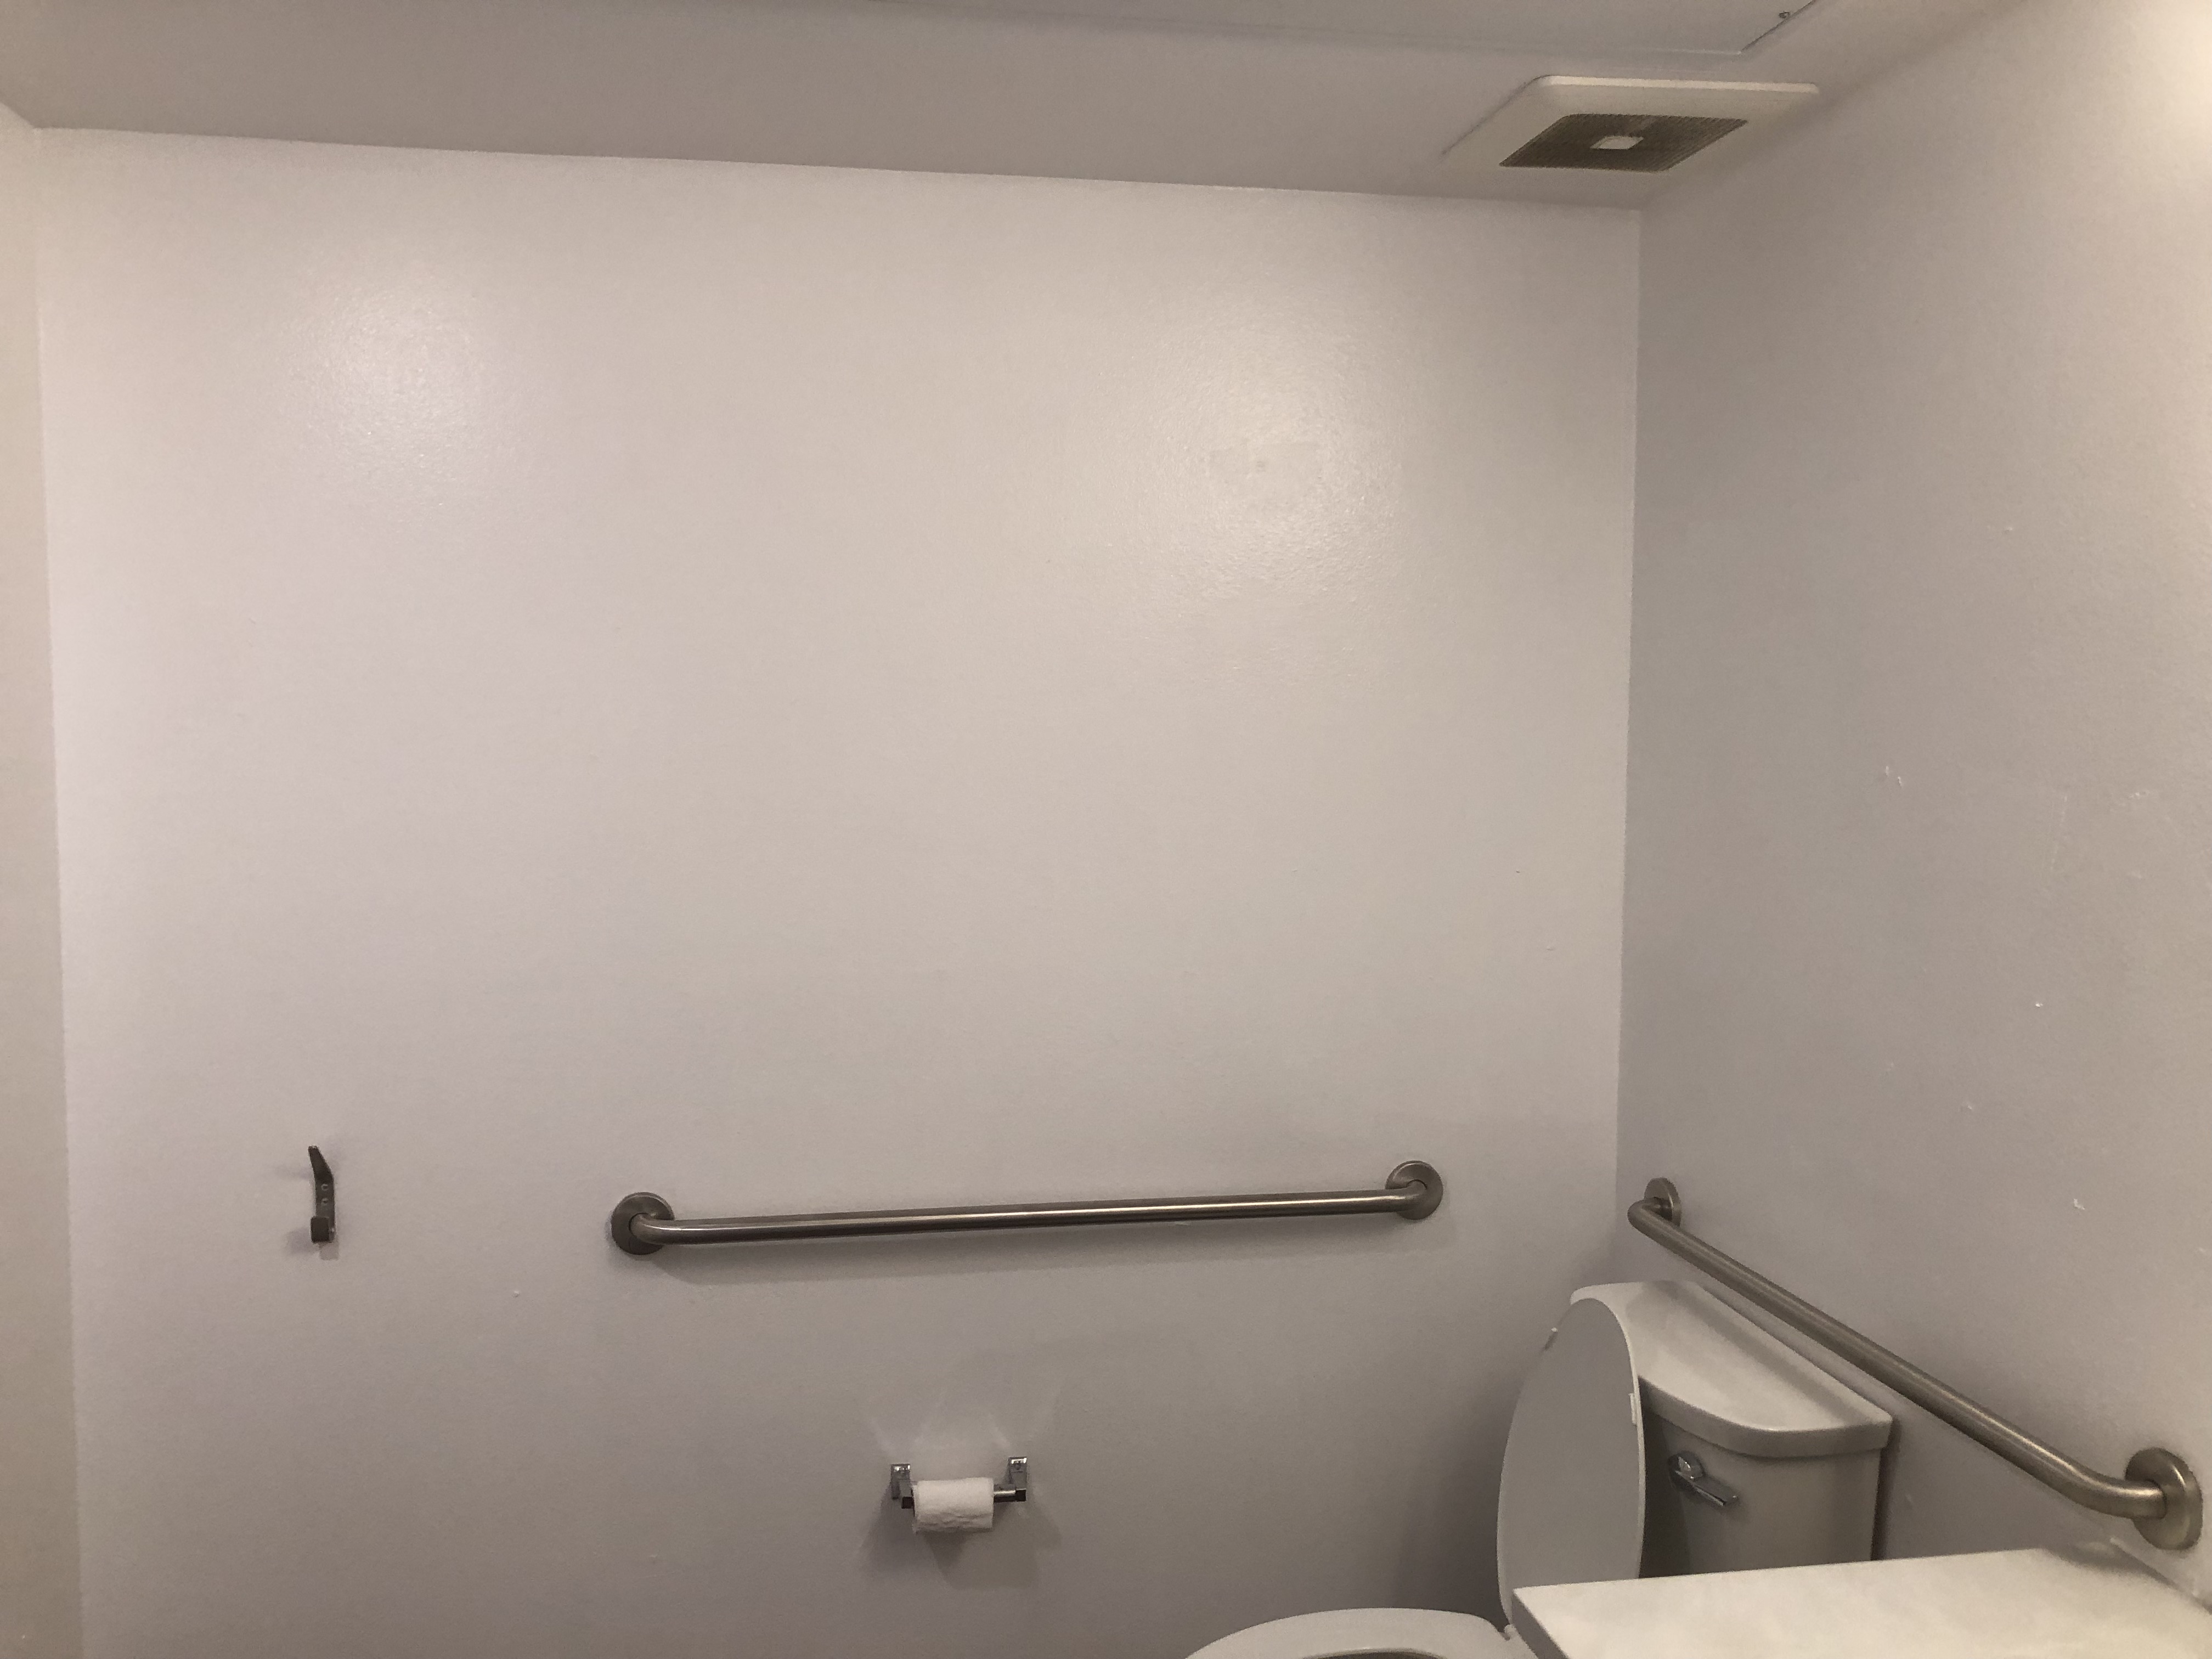 Photo of Unit Bathroom Toilet and grab bars